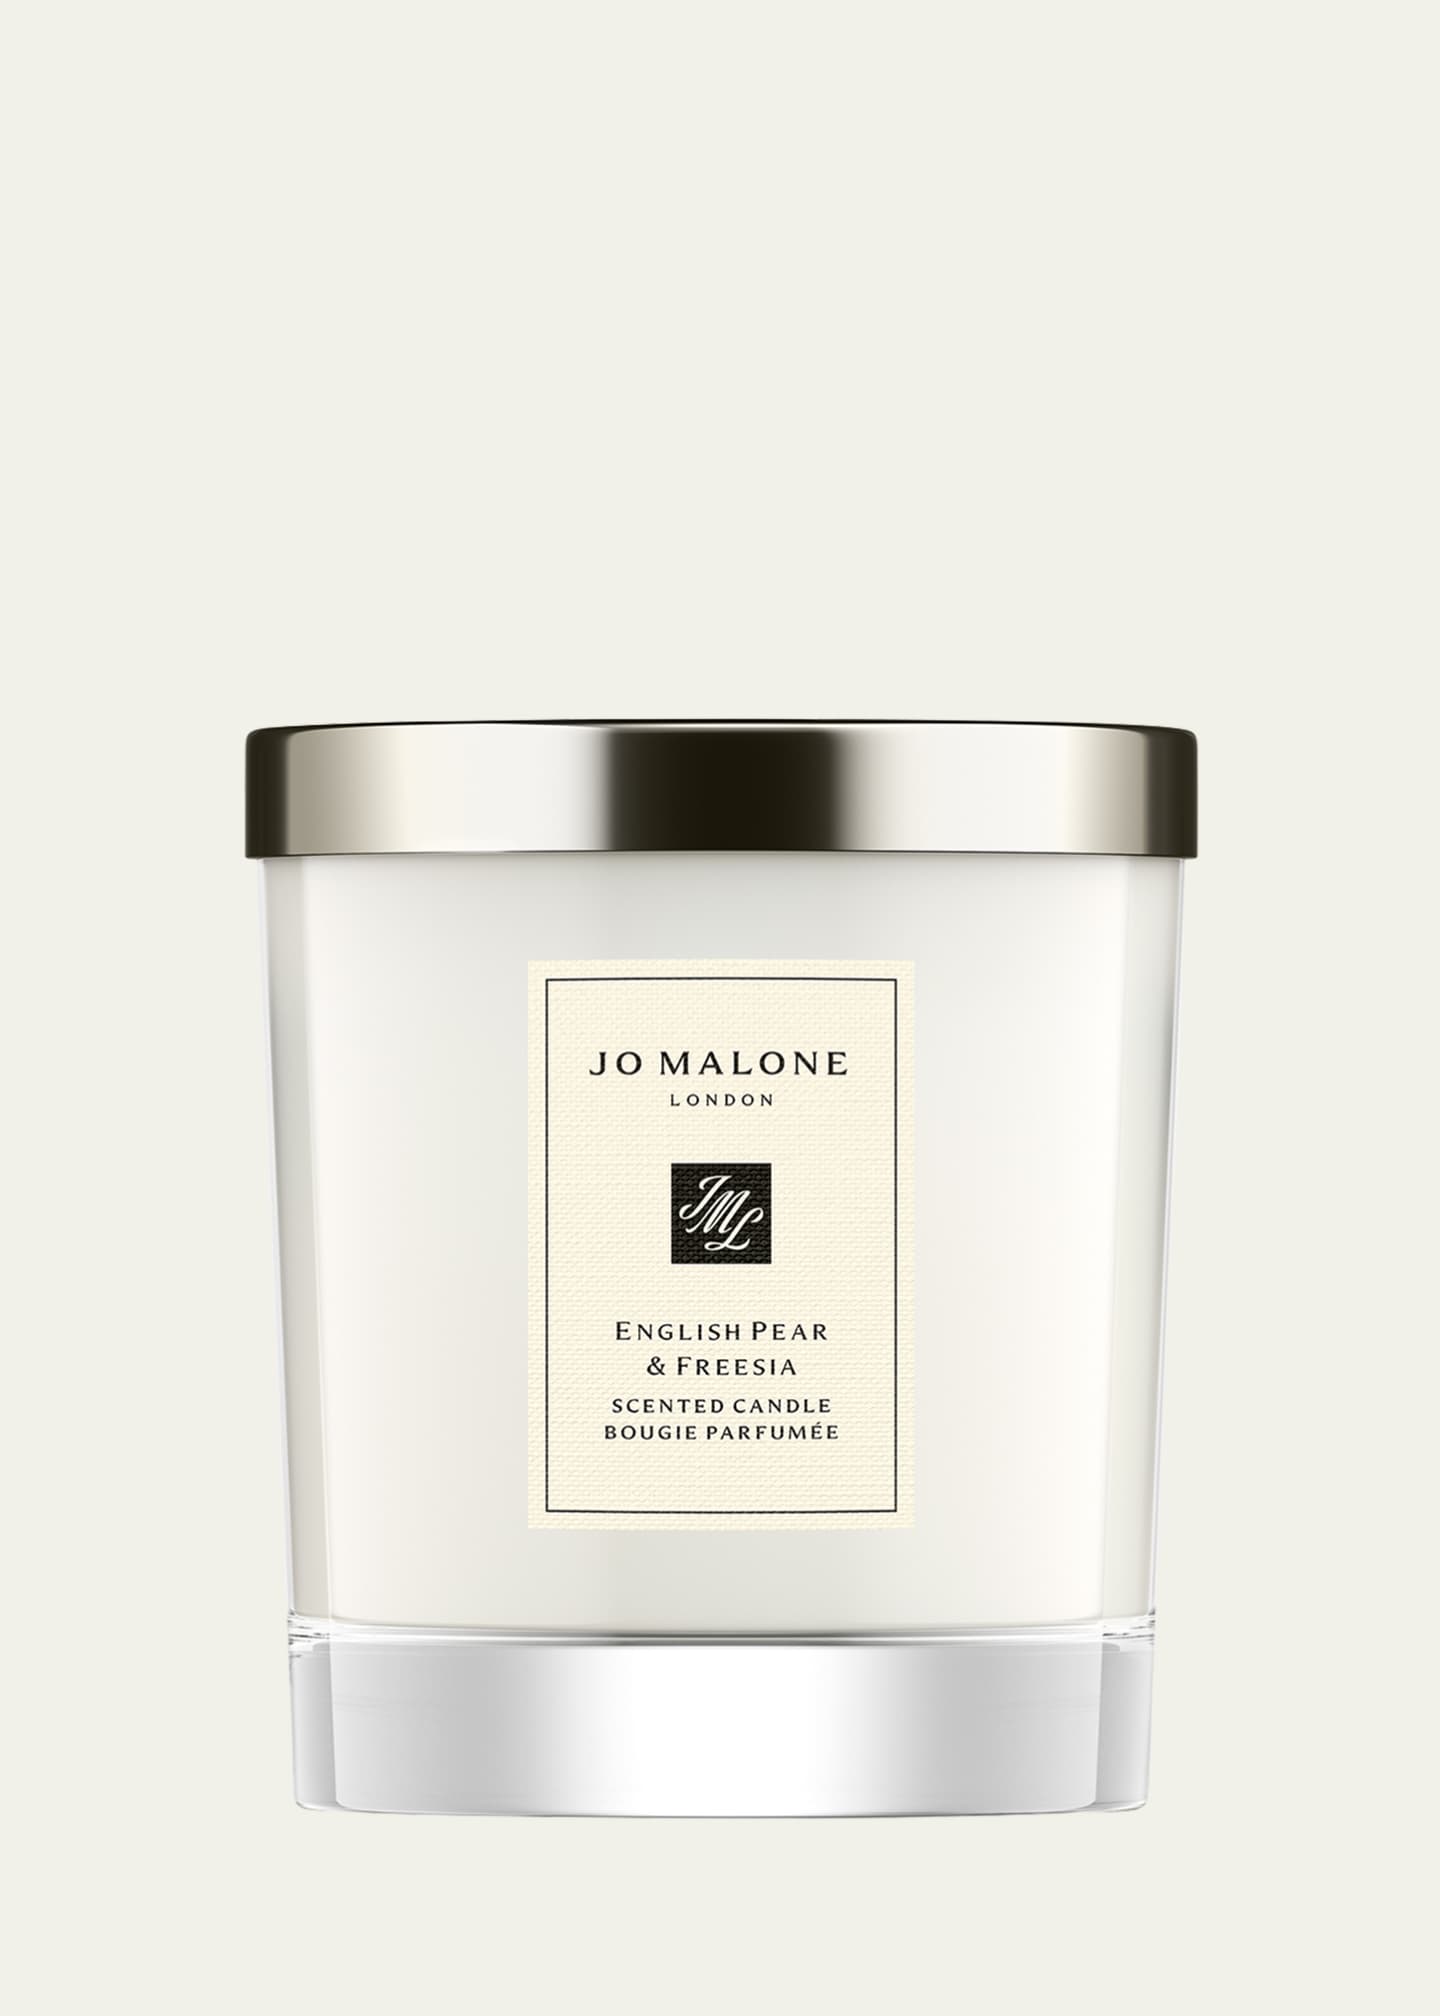 Jo Malone London English Pear & Freesia Home Candle, 7 oz. Image 2 of 5